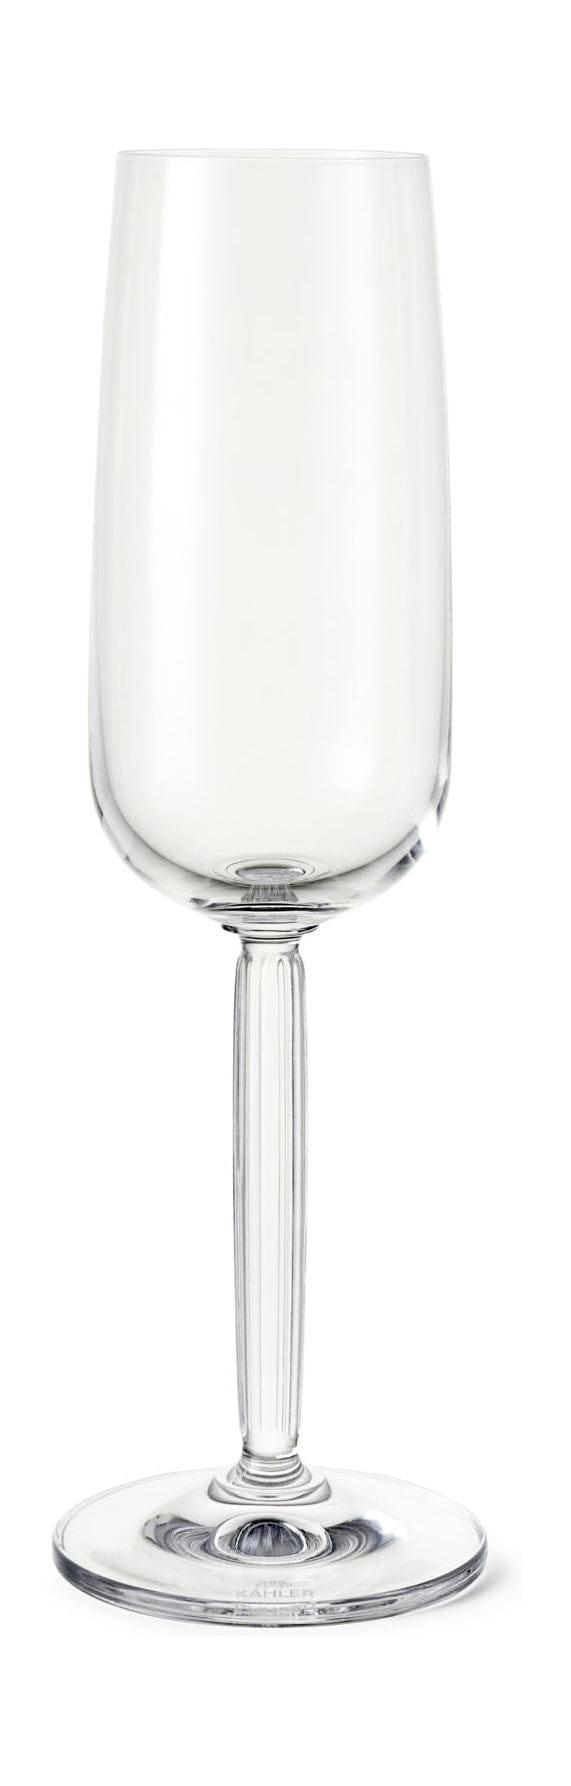 Kähler Hammershøi Champagneglas 2 Stk. 240 ml, Klar